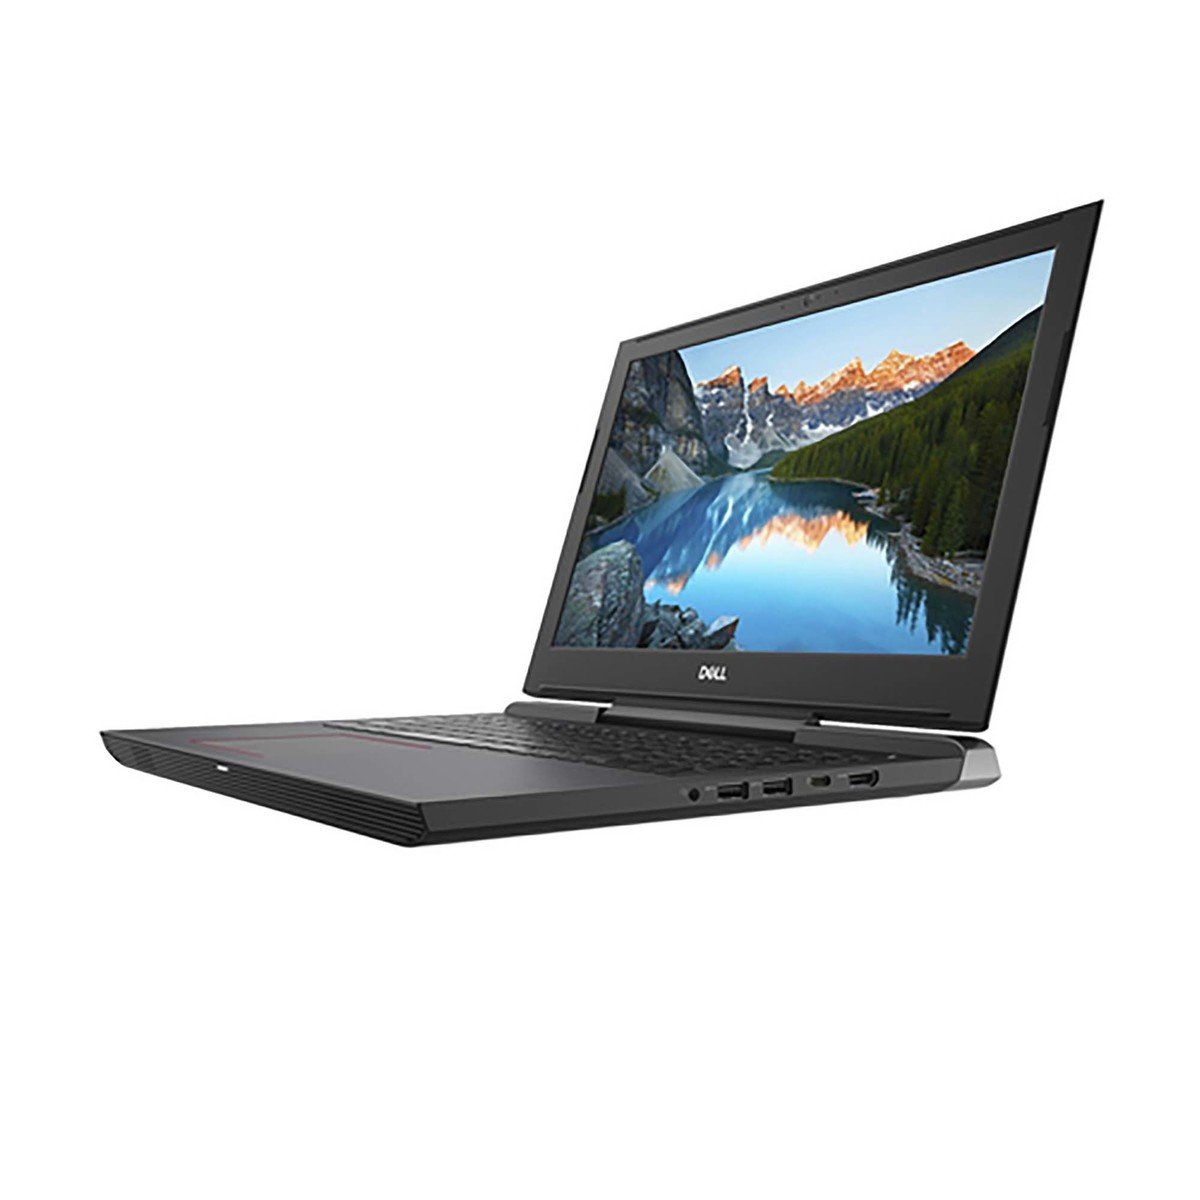 Dell G5 1189 Gaming Notebook Black (Core i7, 16GB, 1TB+256GB SSD, 15.6" FHD, 6GB NVIDIA GTX 1060Ti, Windows 10)